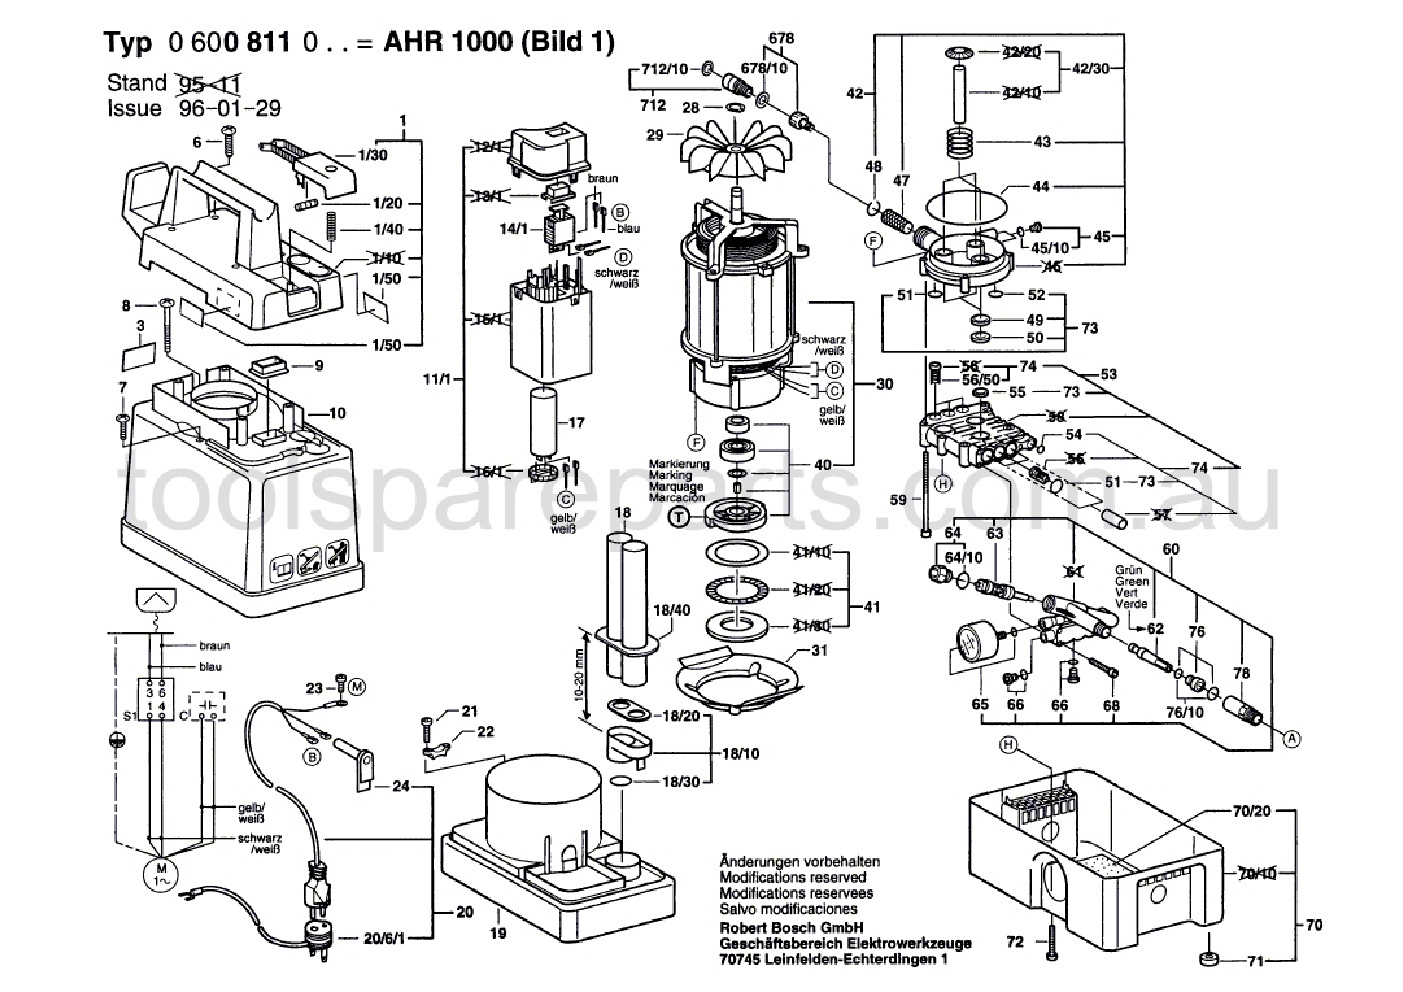 Bosch AHR 1000 0600811037  Diagram 1